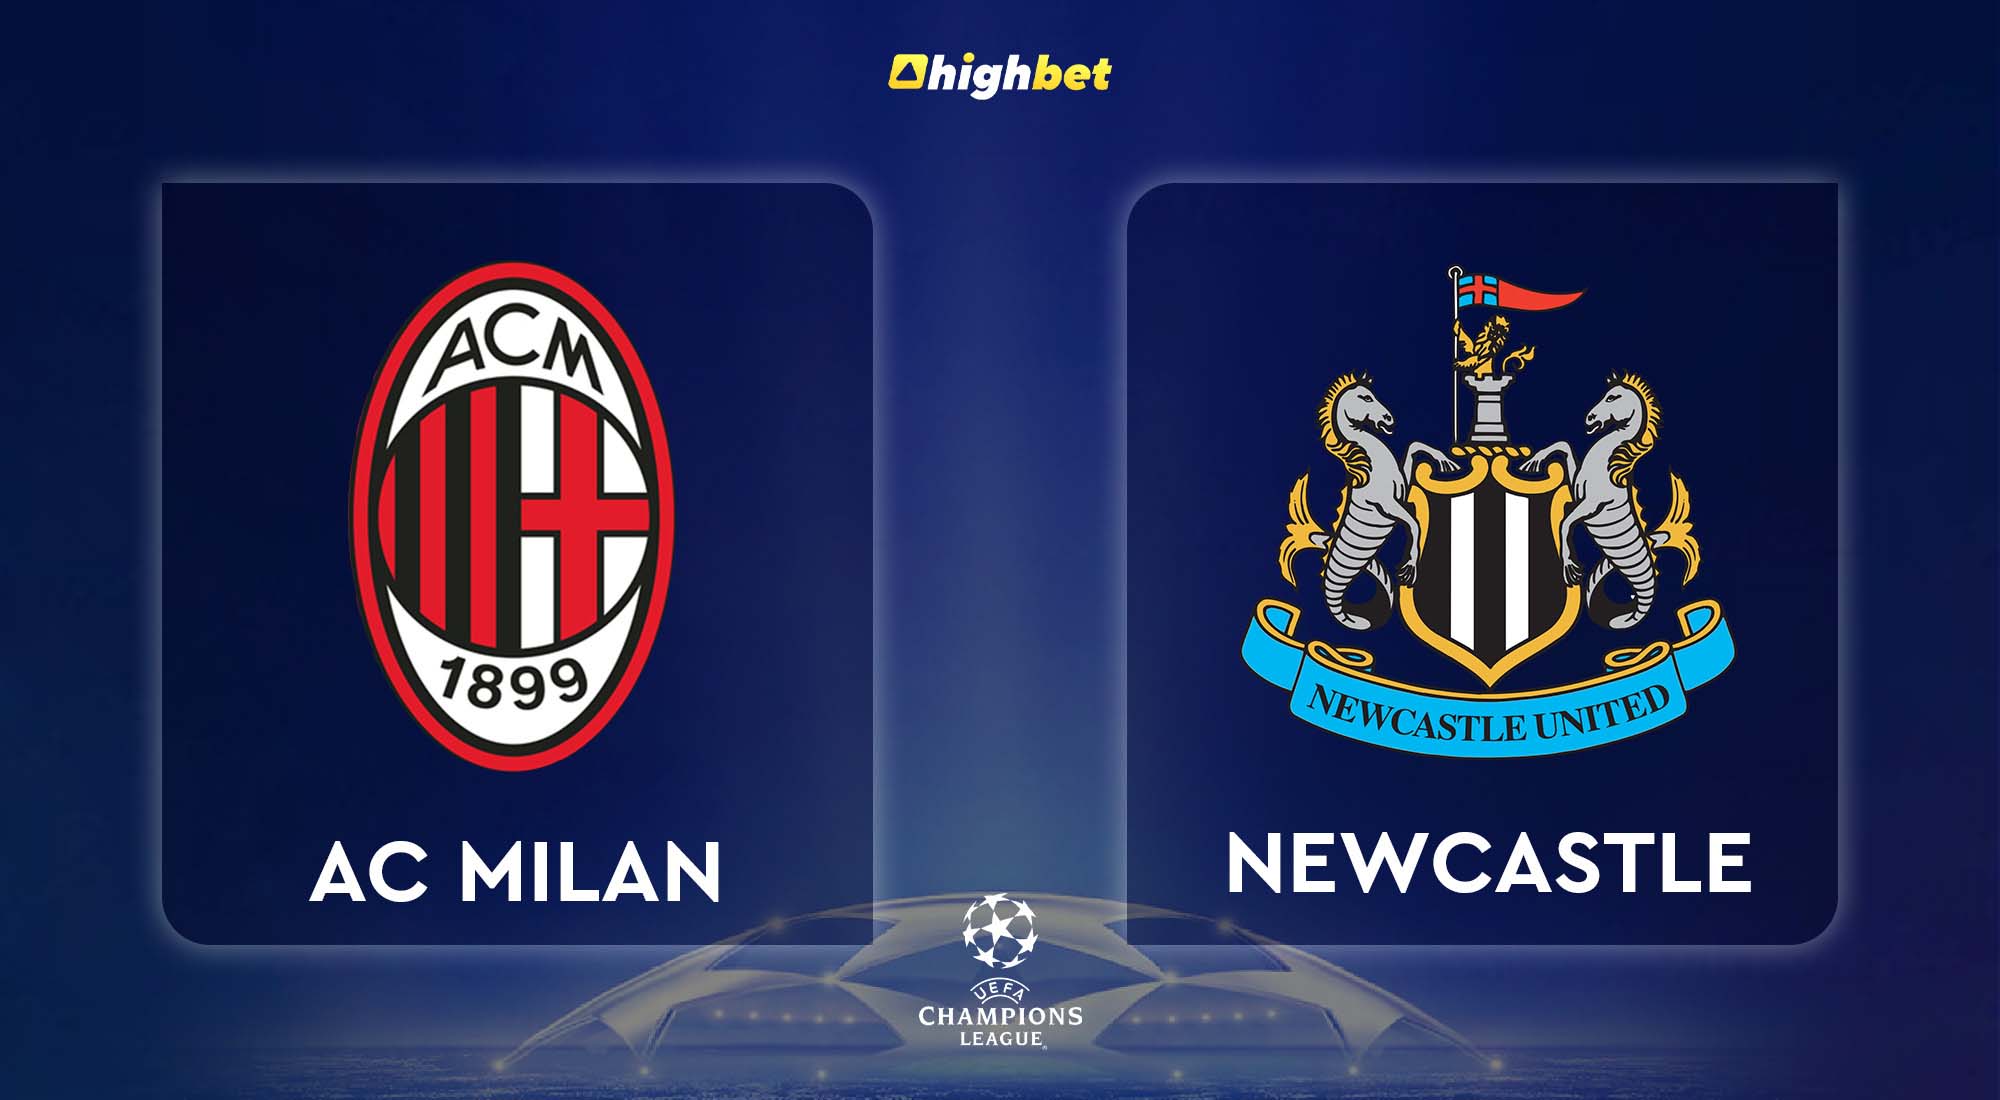 AC Milan vs Newcastle - highbet UEFA Champions League Pre-Match Analysis